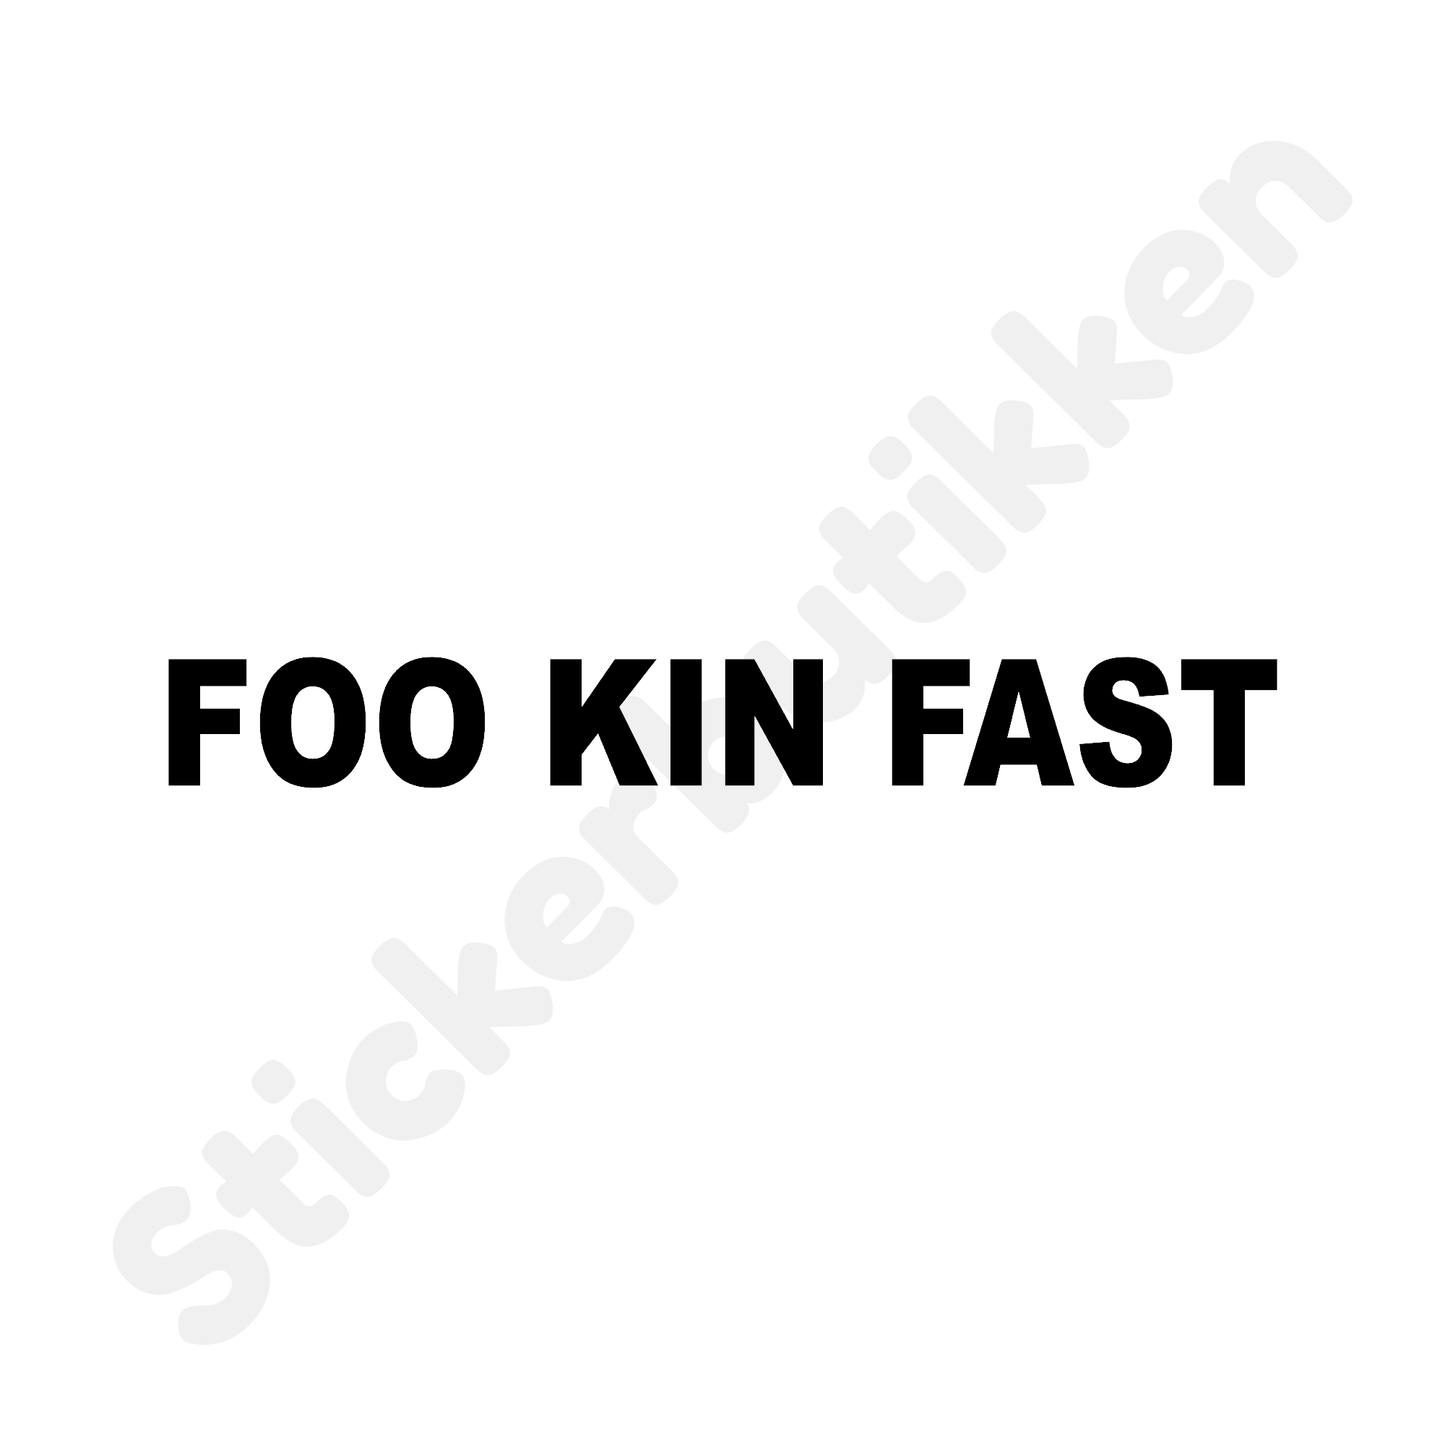 Foo Kin Fast